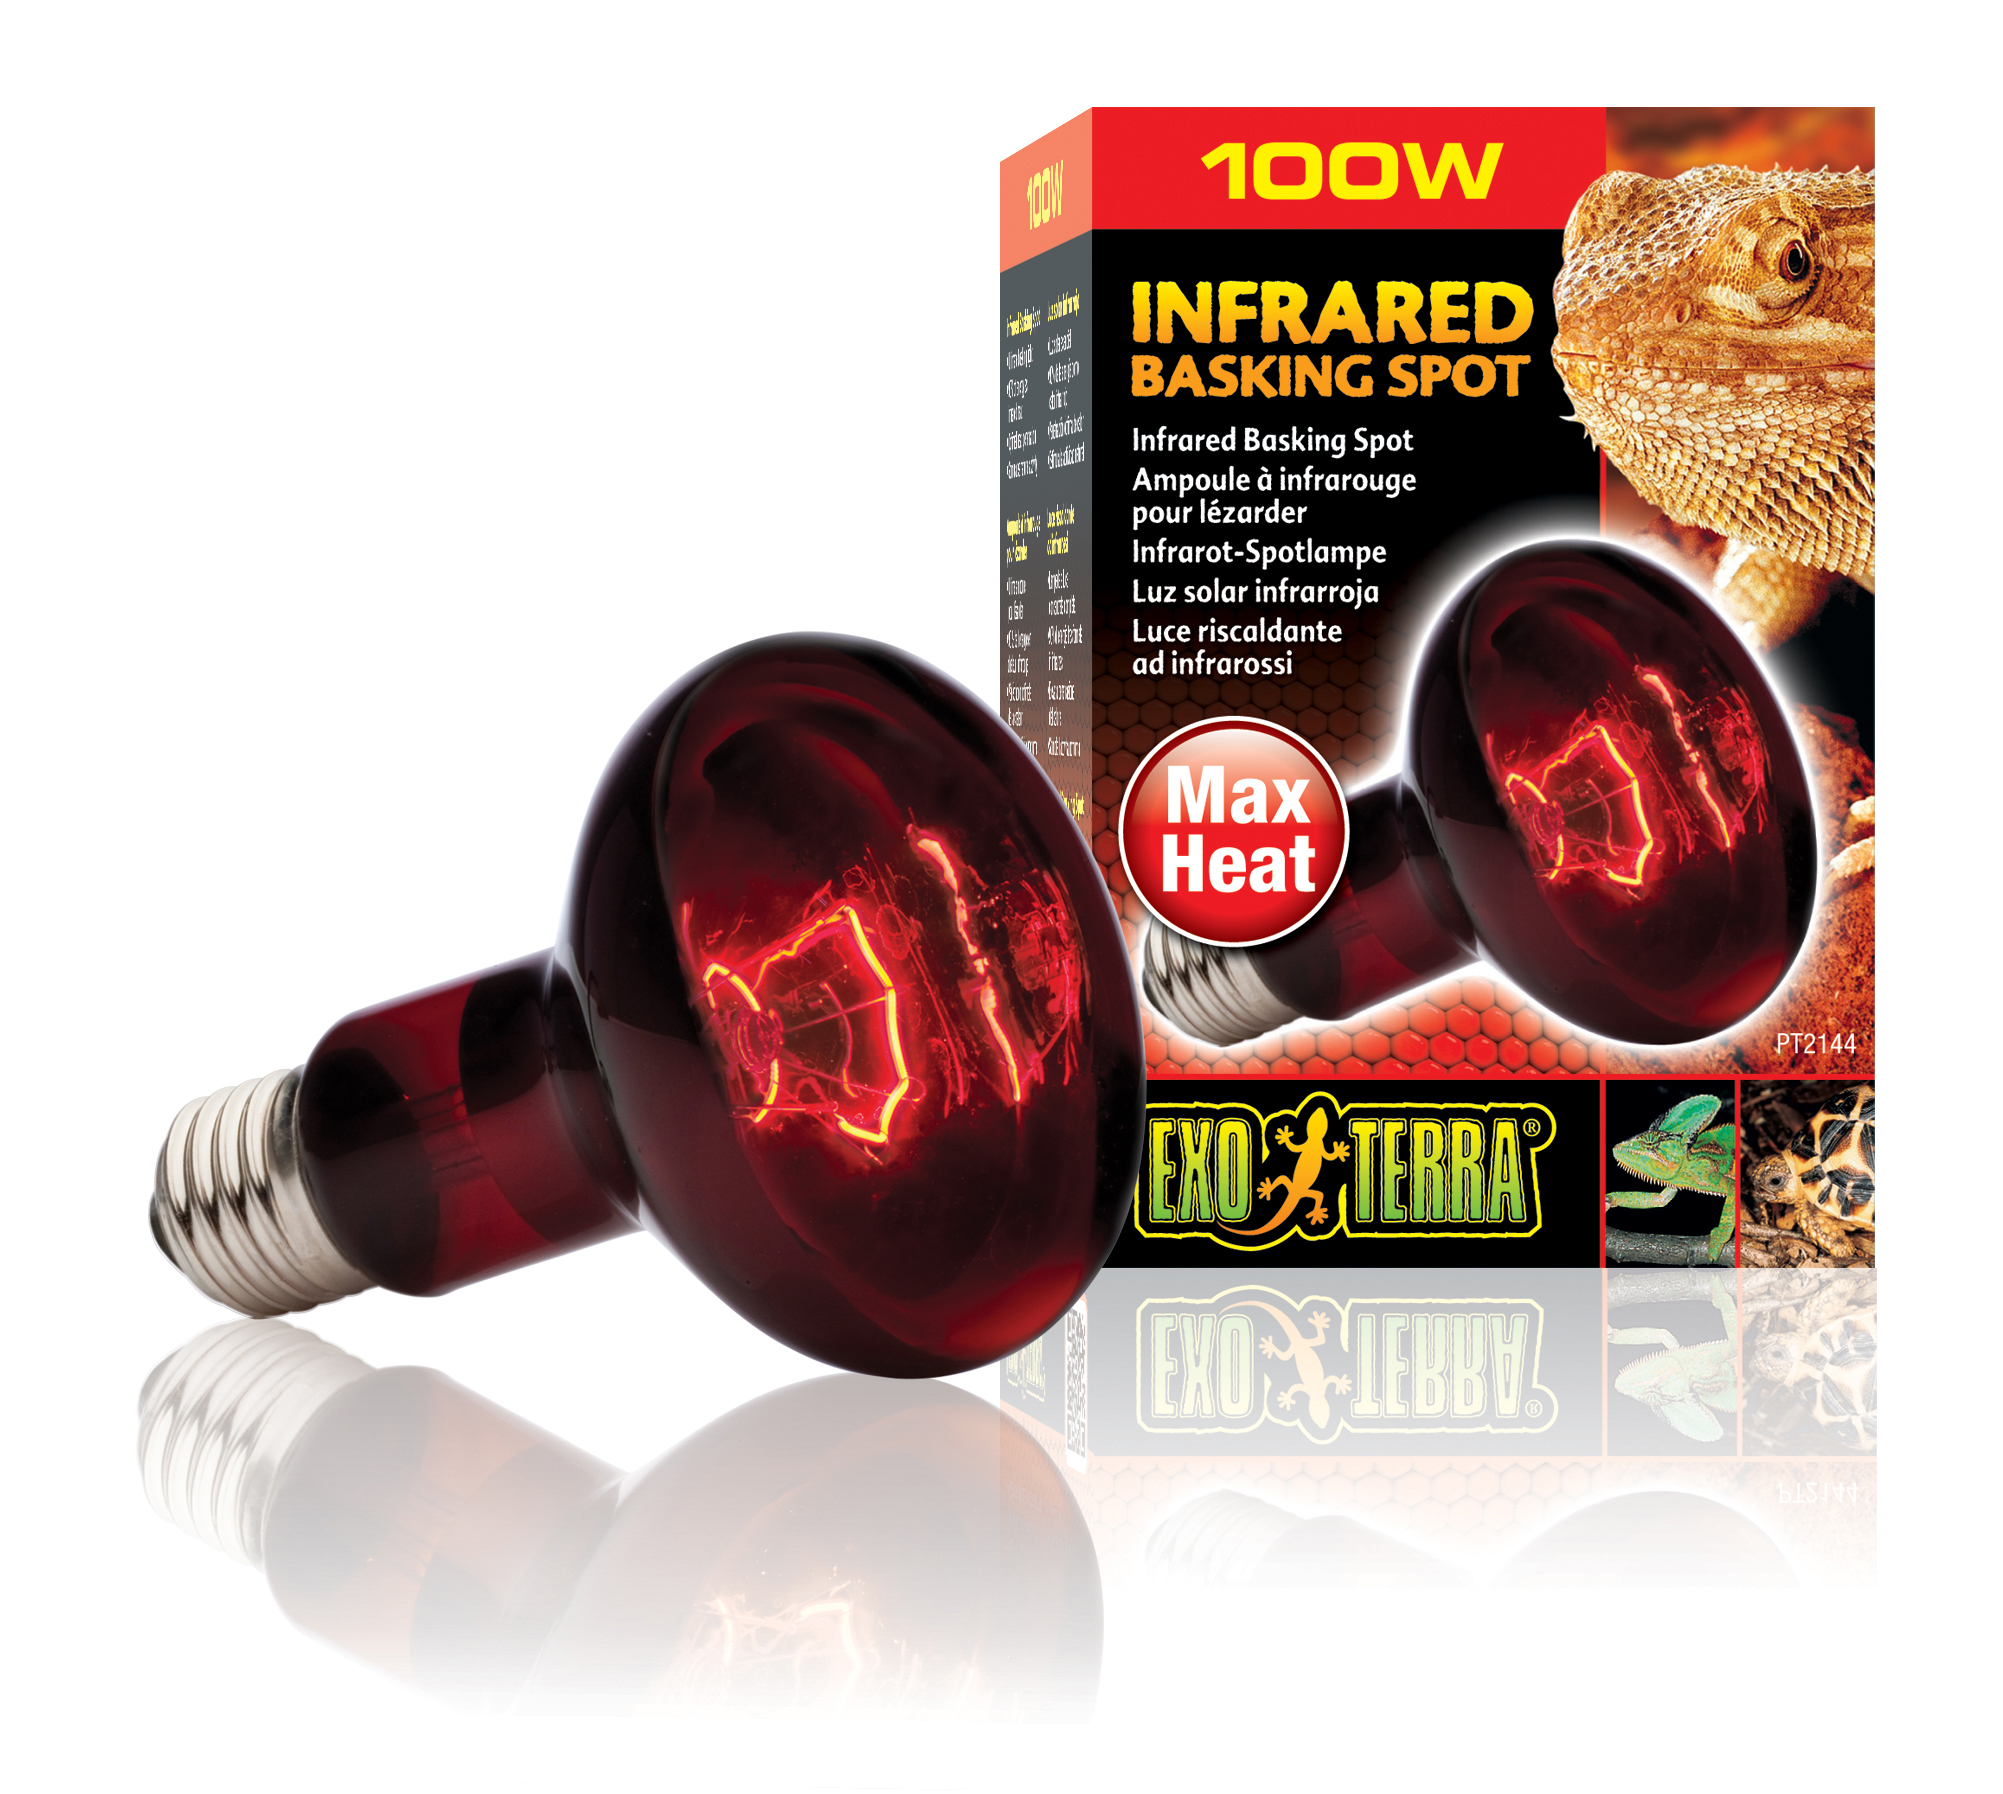 Ex lampe infrared basking spot - Product shot